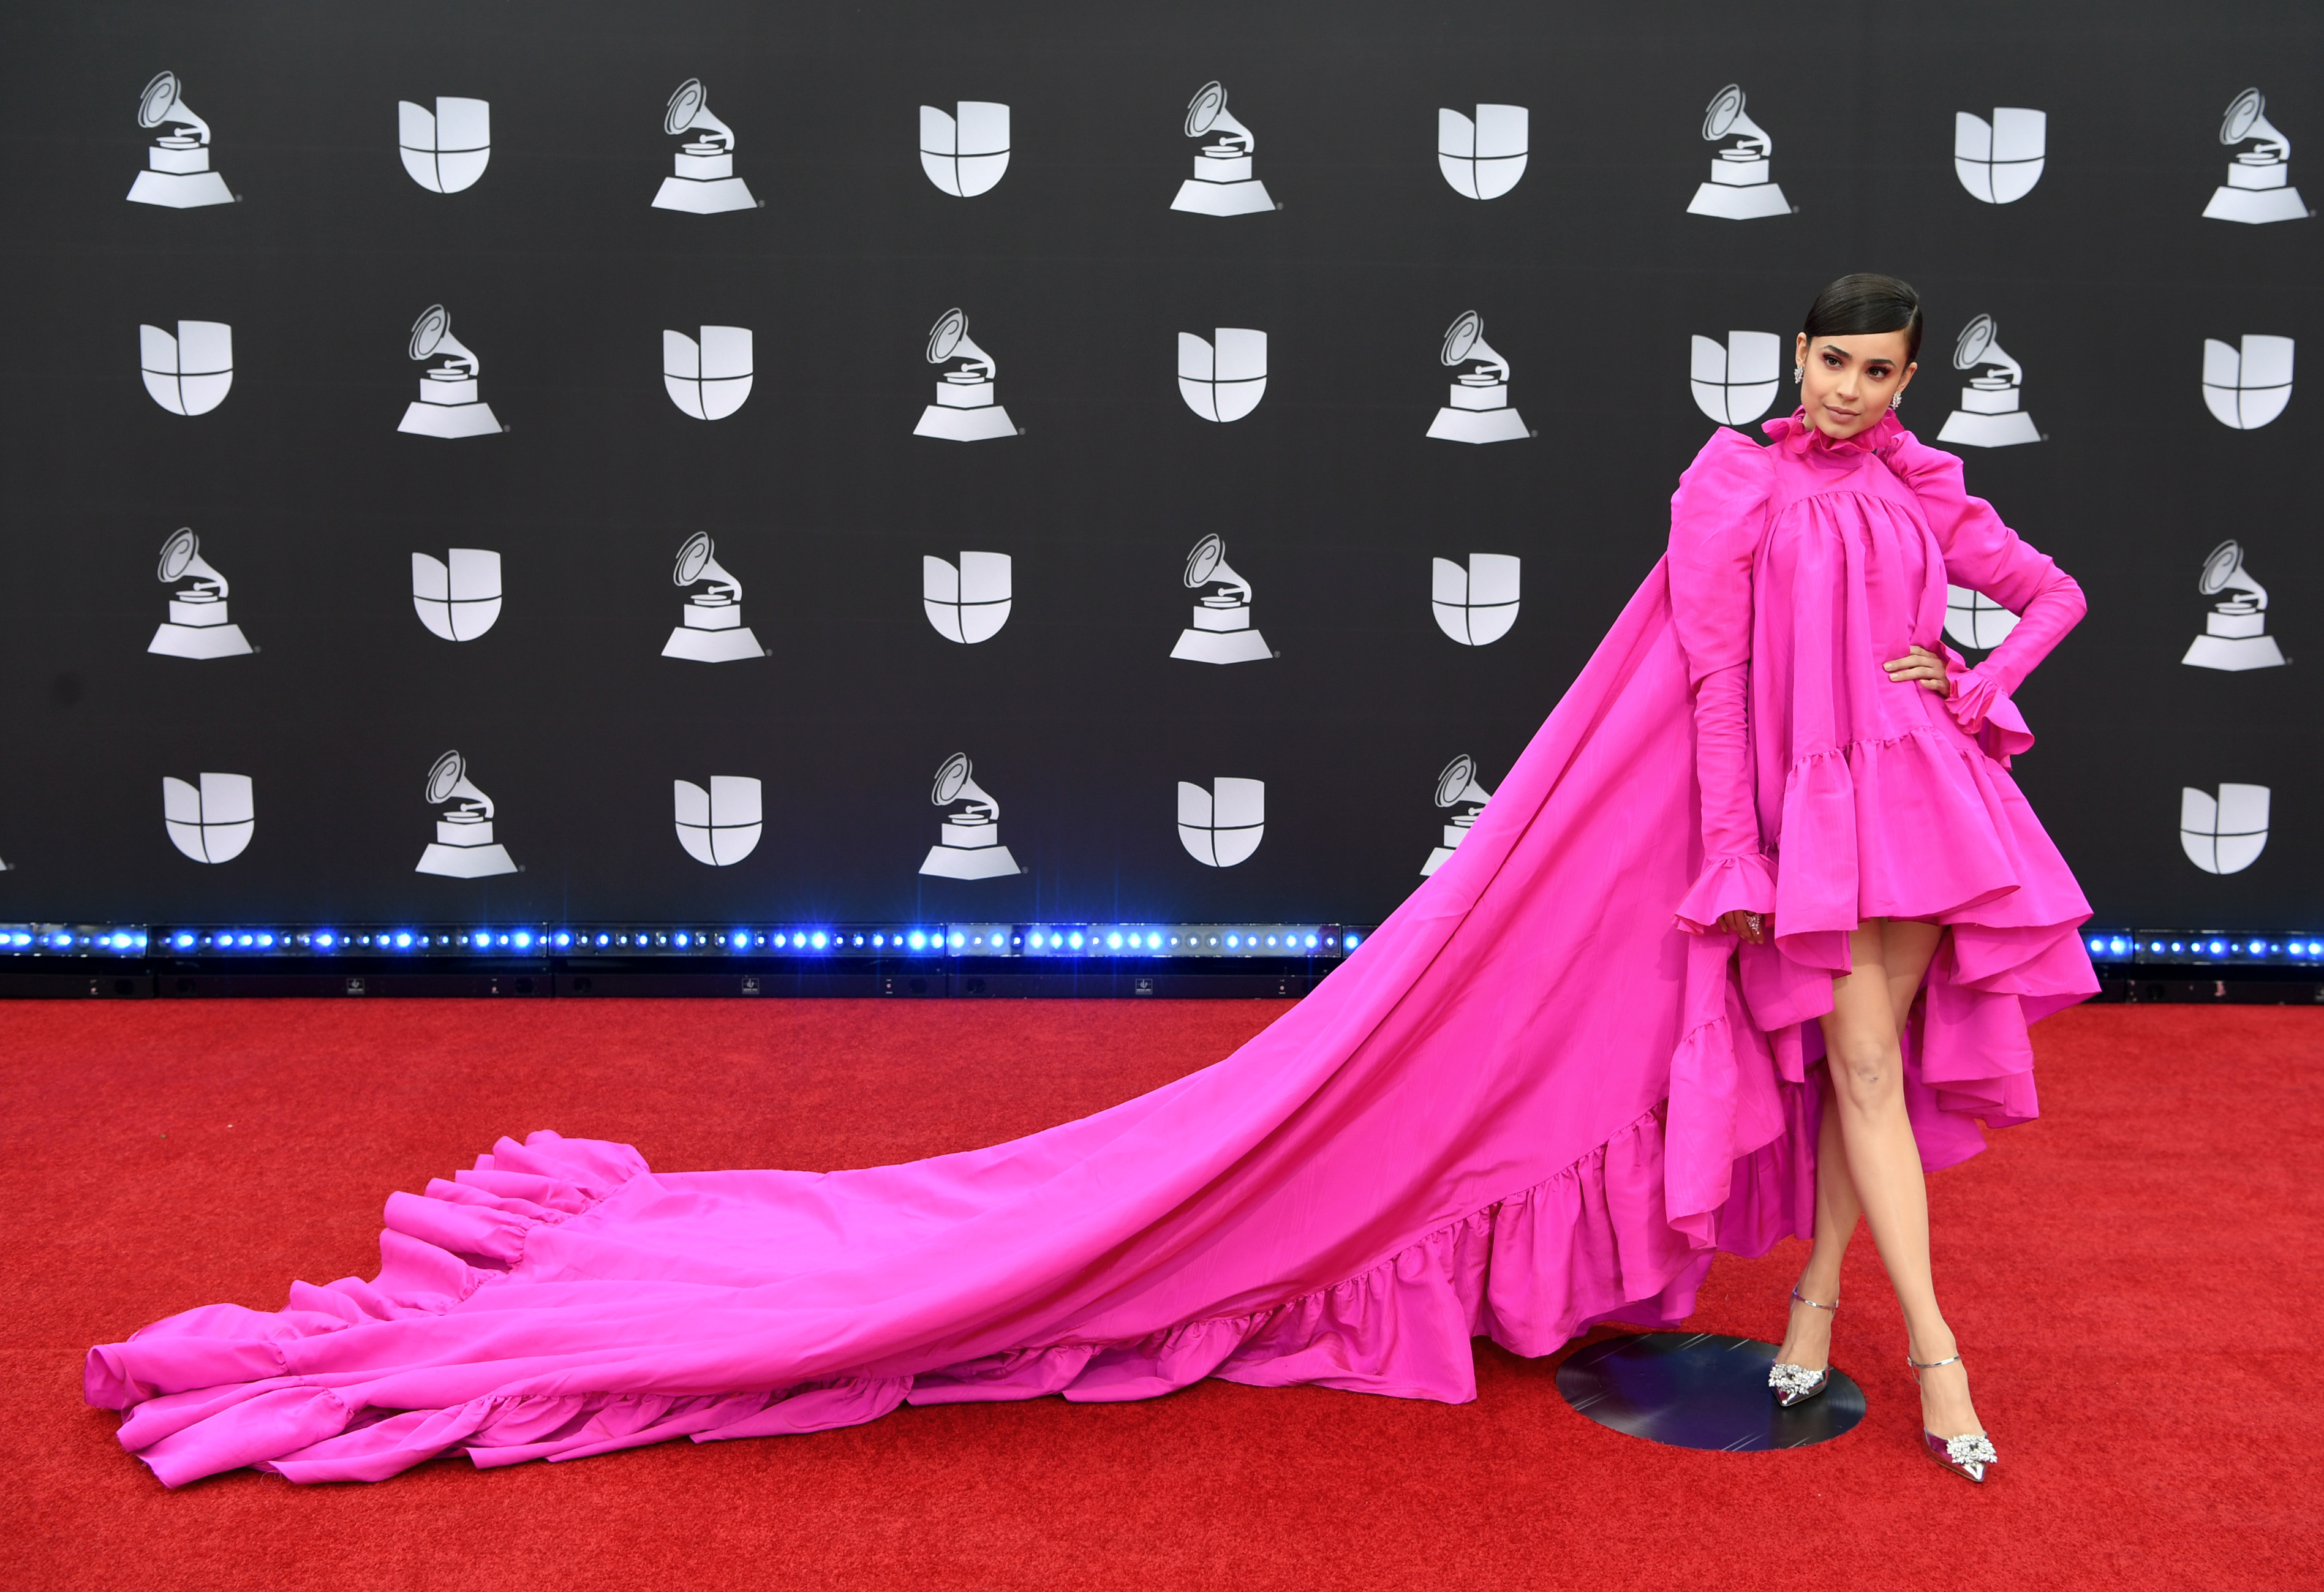 Latin Grammy 2022: Best Red Carpet Looks